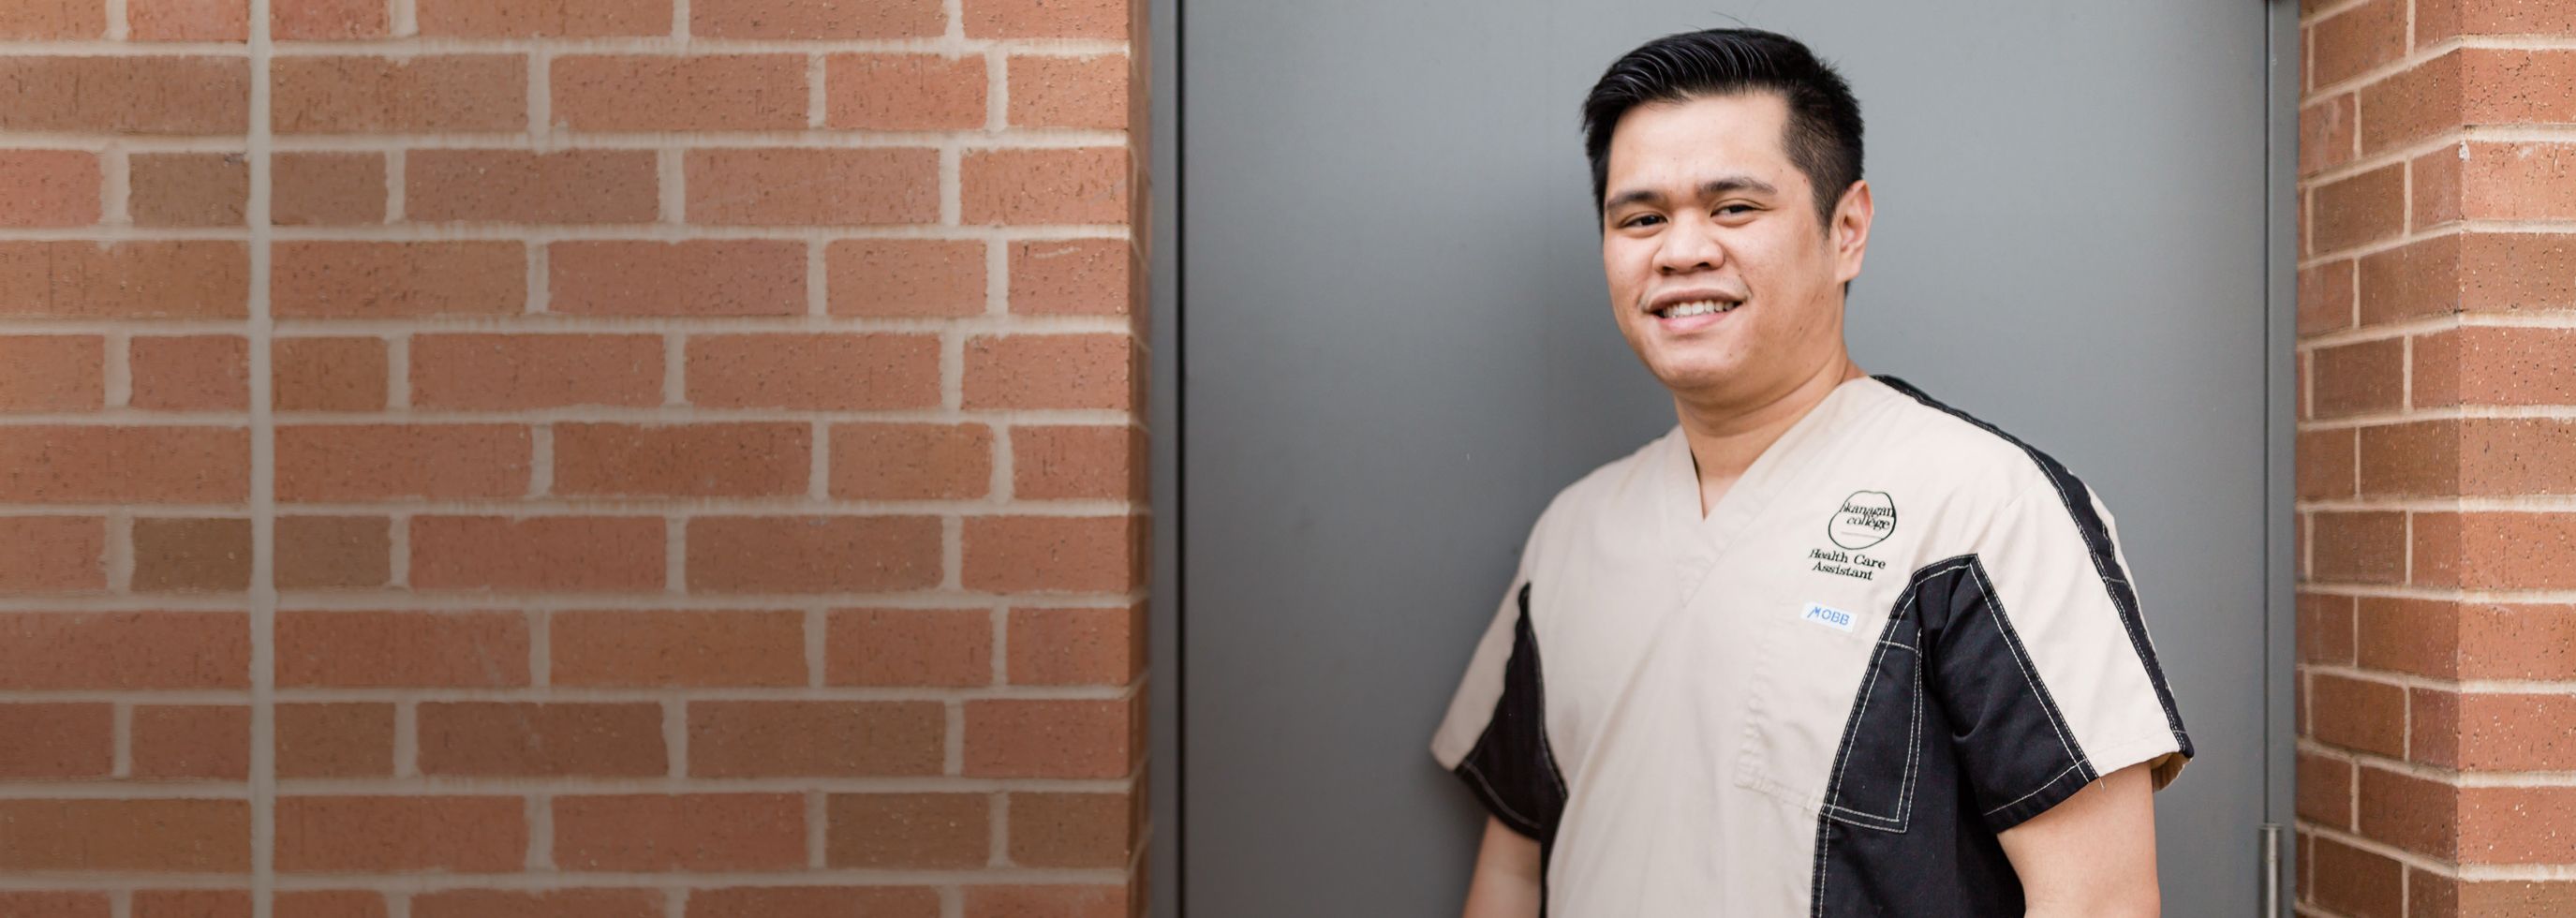 Male health student standing by a brick wall wearing his 91̽ health program uniform shirt